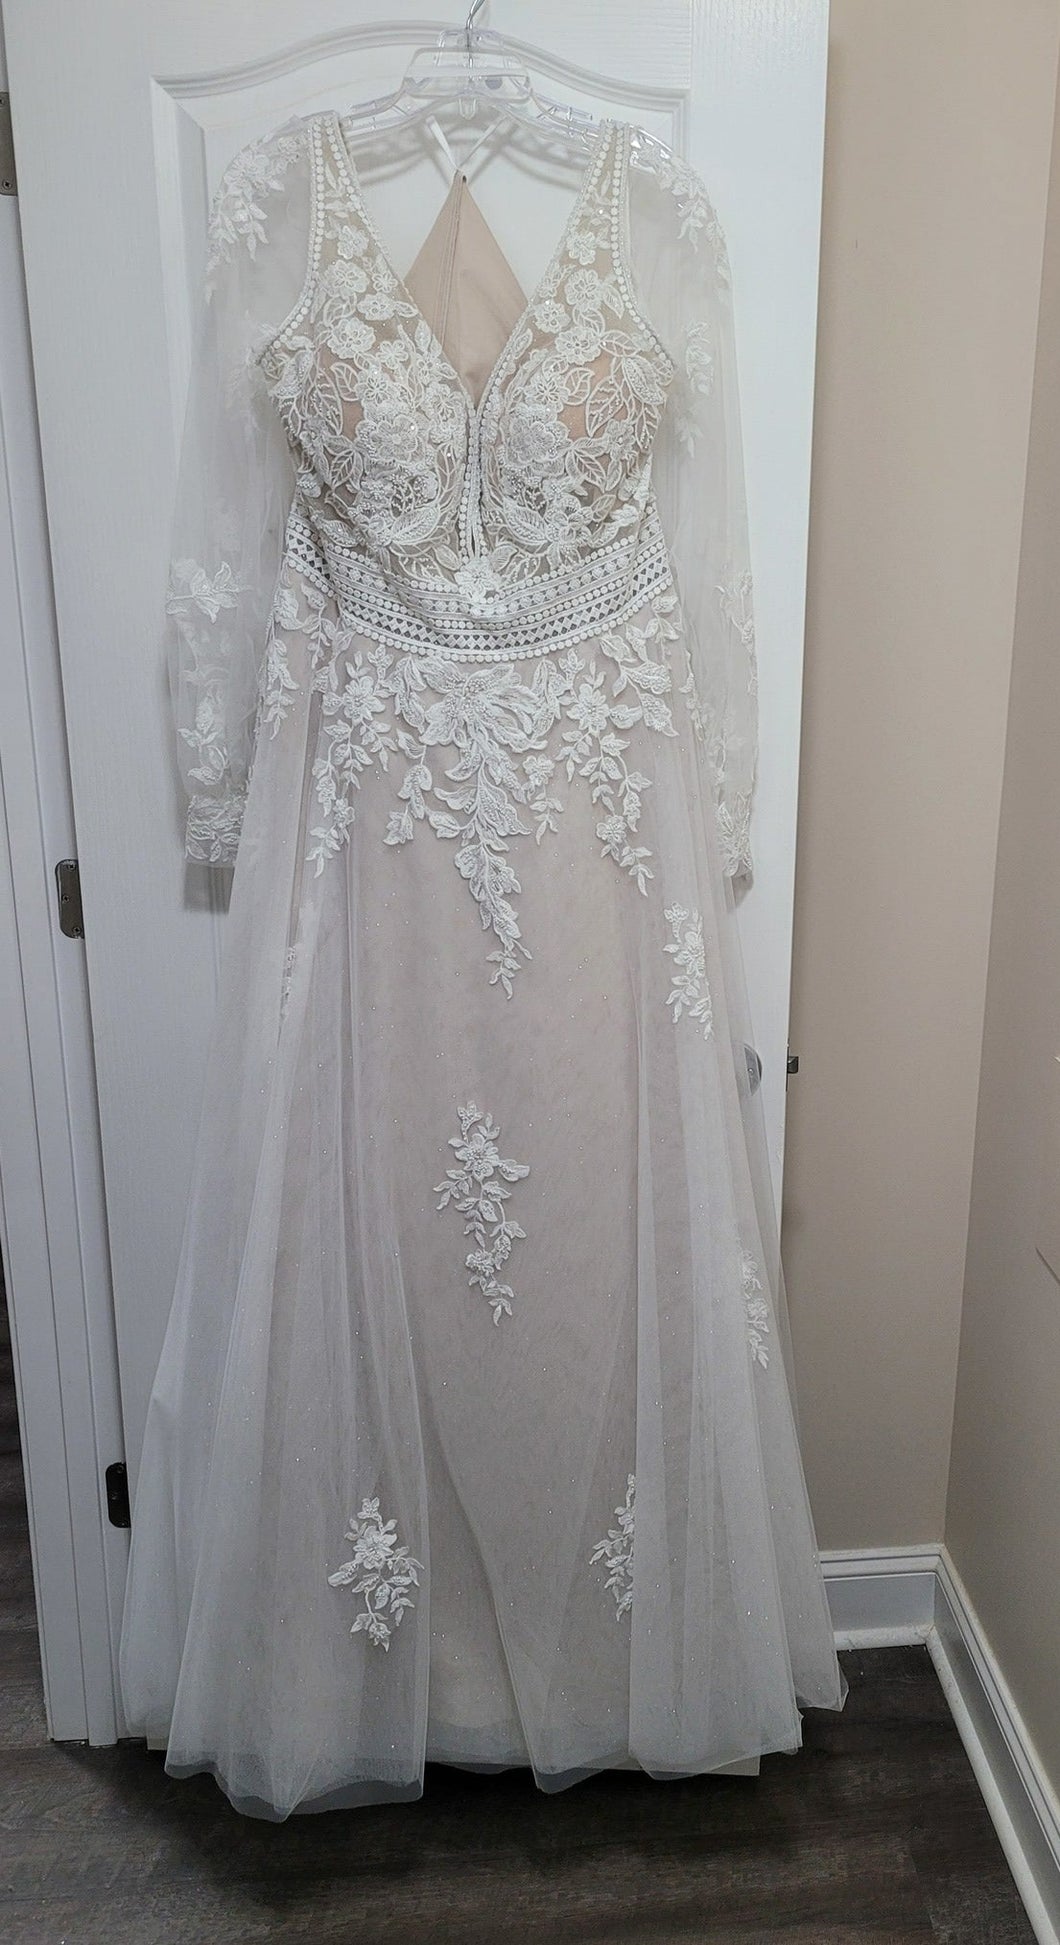 Amanda's  '974 / LAL' wedding dress size-20W NEW